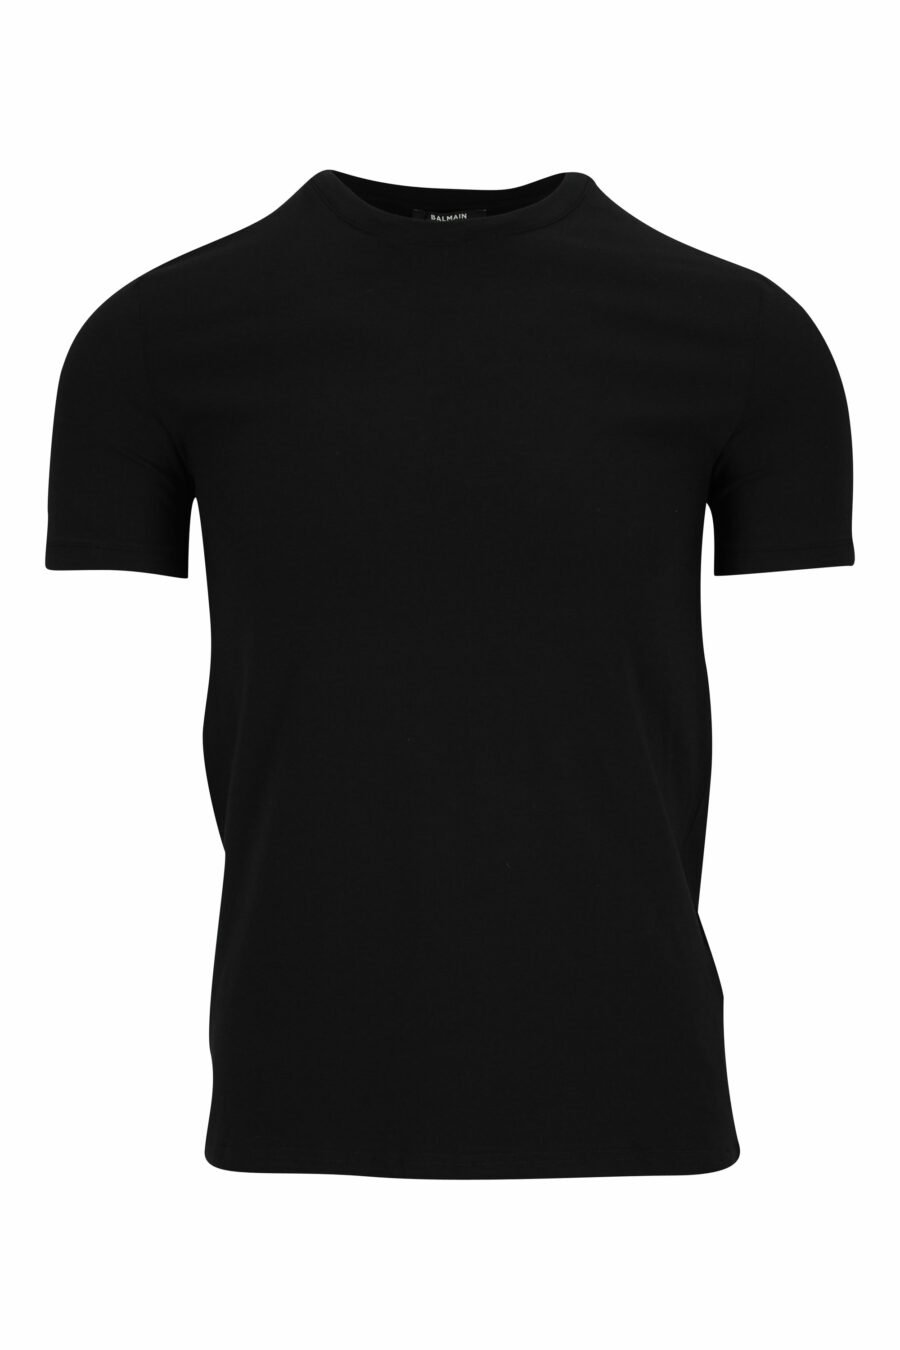 Black T-shirt with mini-logo on the collar - 8032674524621